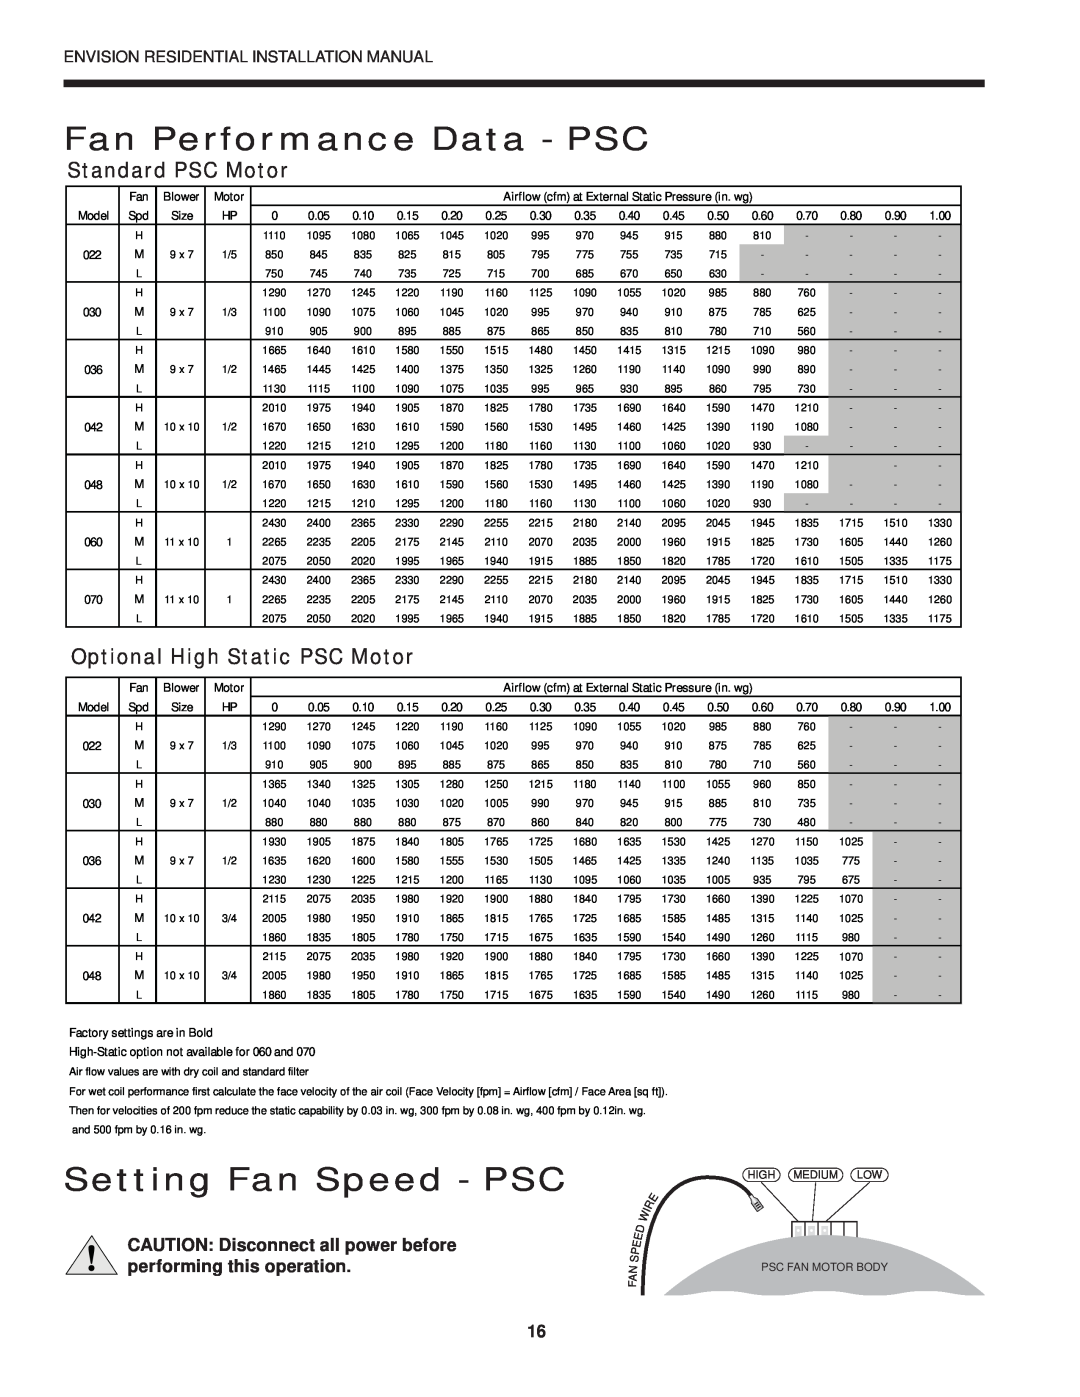 Envision Peripherals R-410A installation manual Fan Performance Data - PSC, Setting Fan Speed - PSC, Standard PSC Motor 